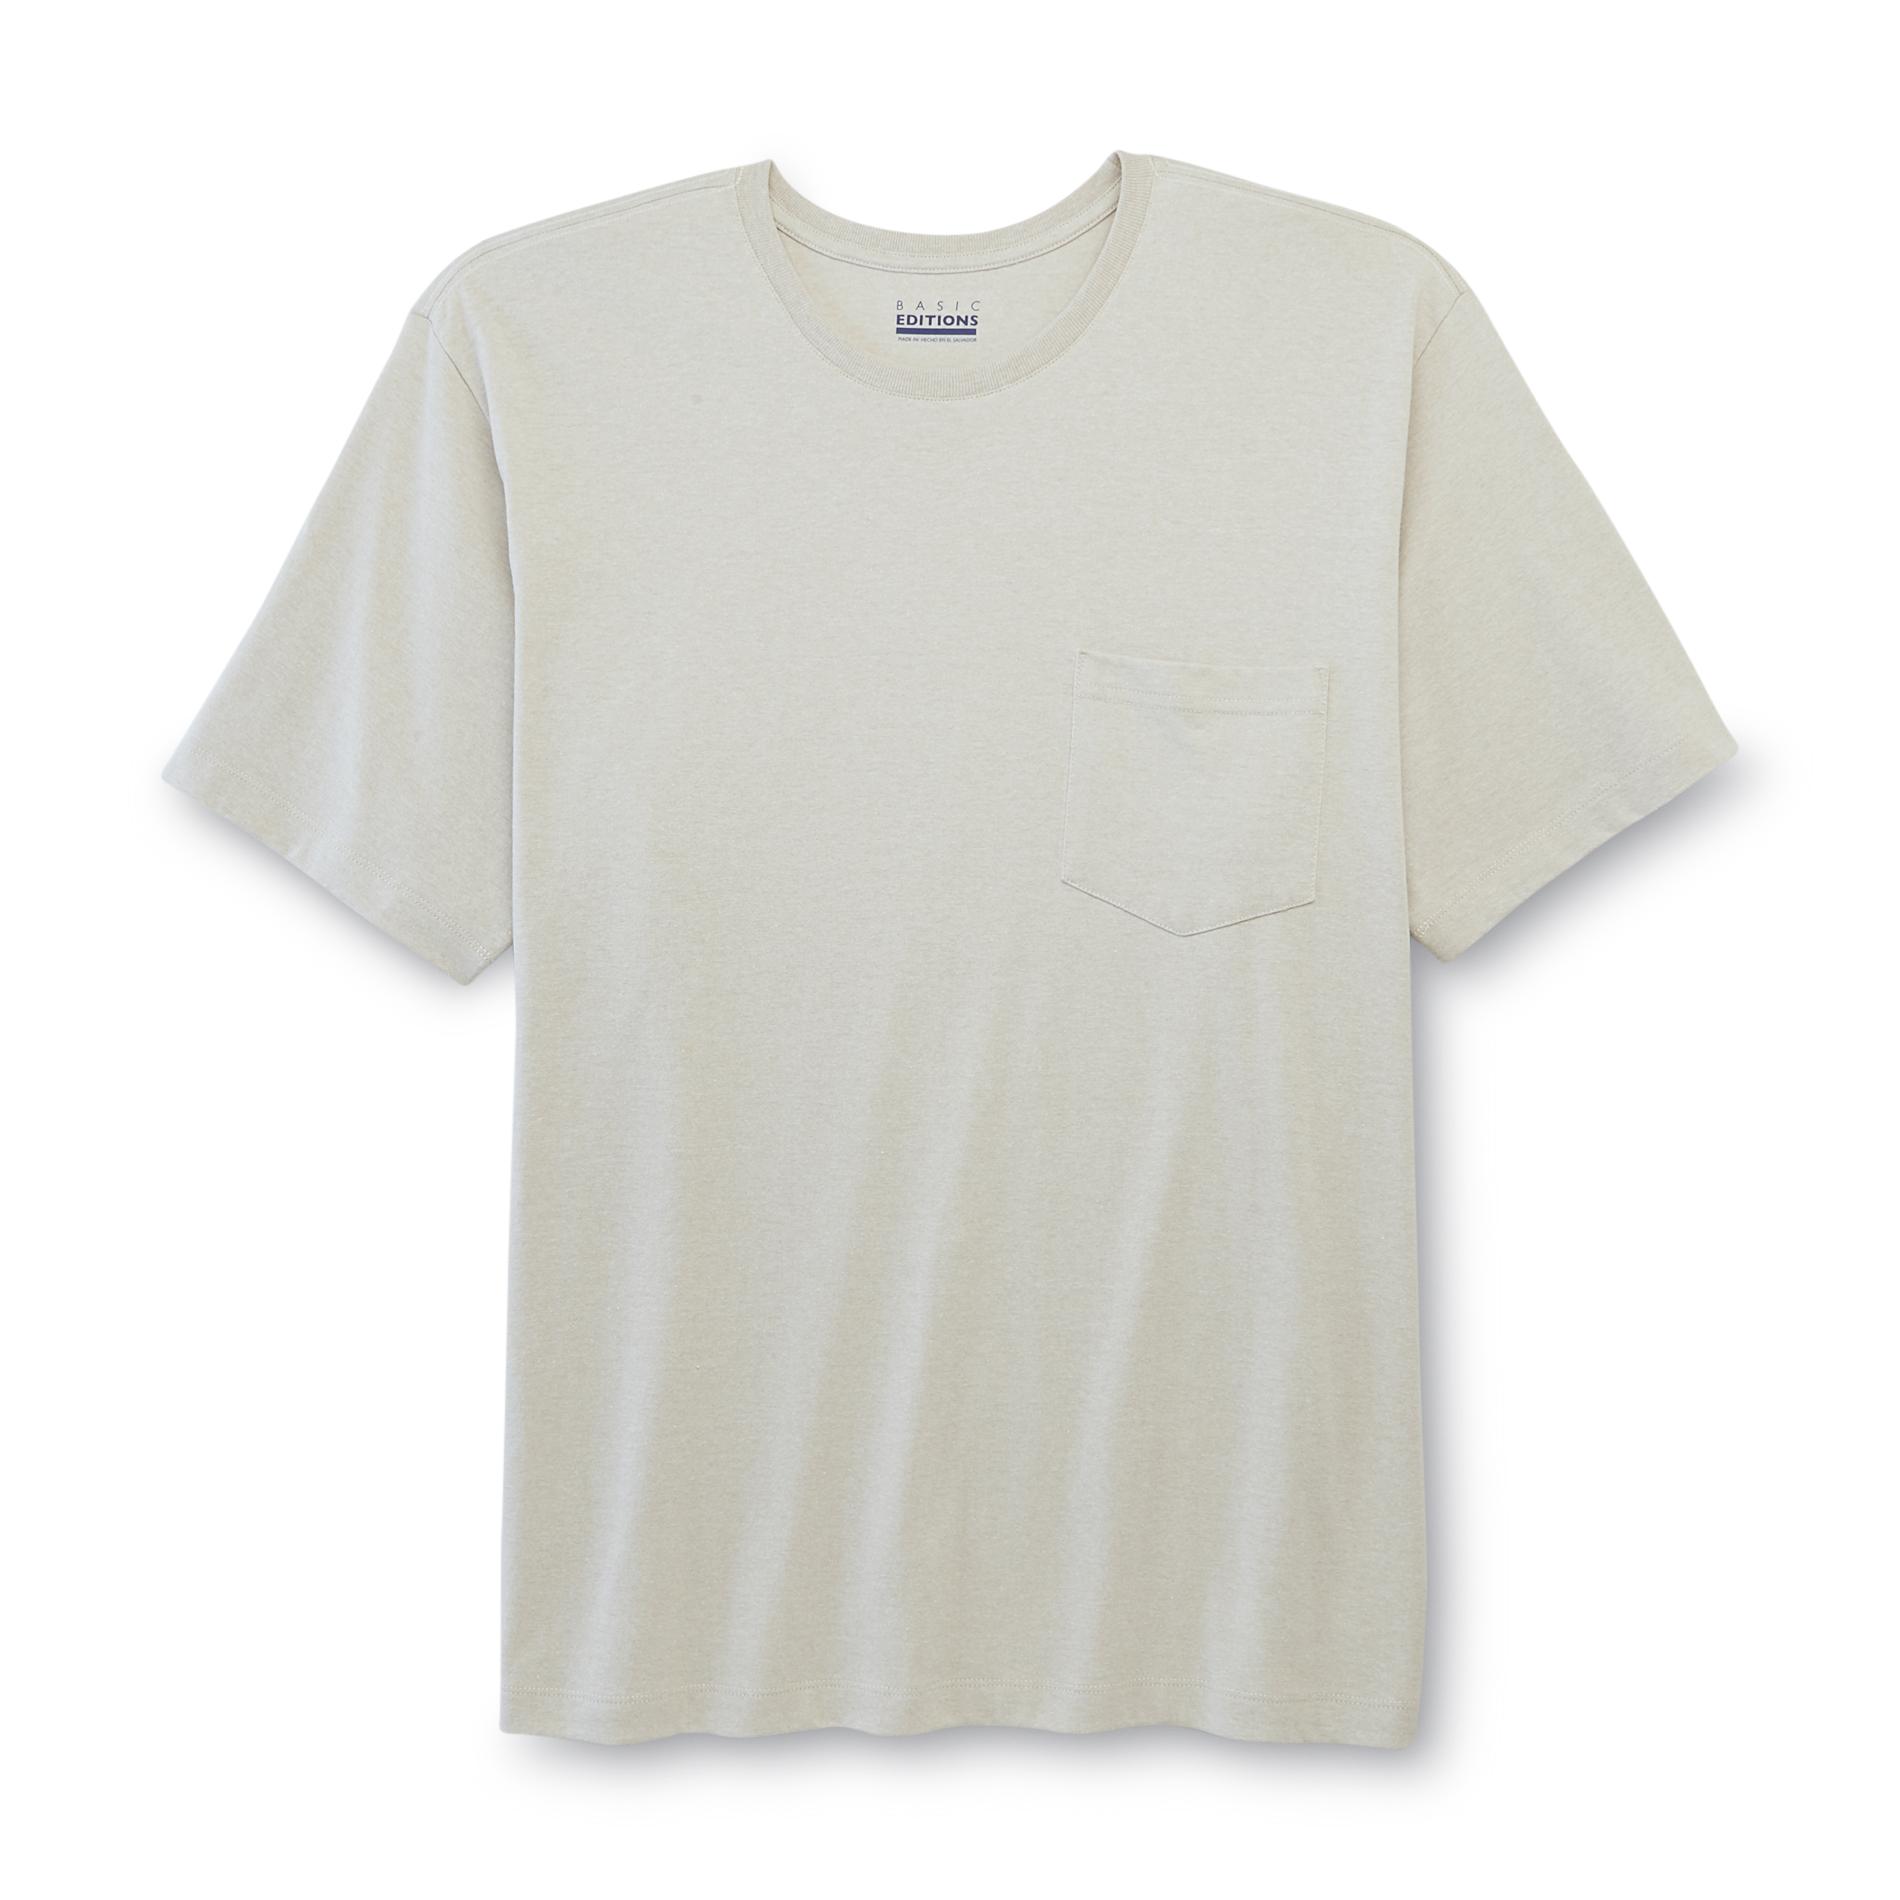 Basic Editions Men's Big & Tall Pocket T-Shirt